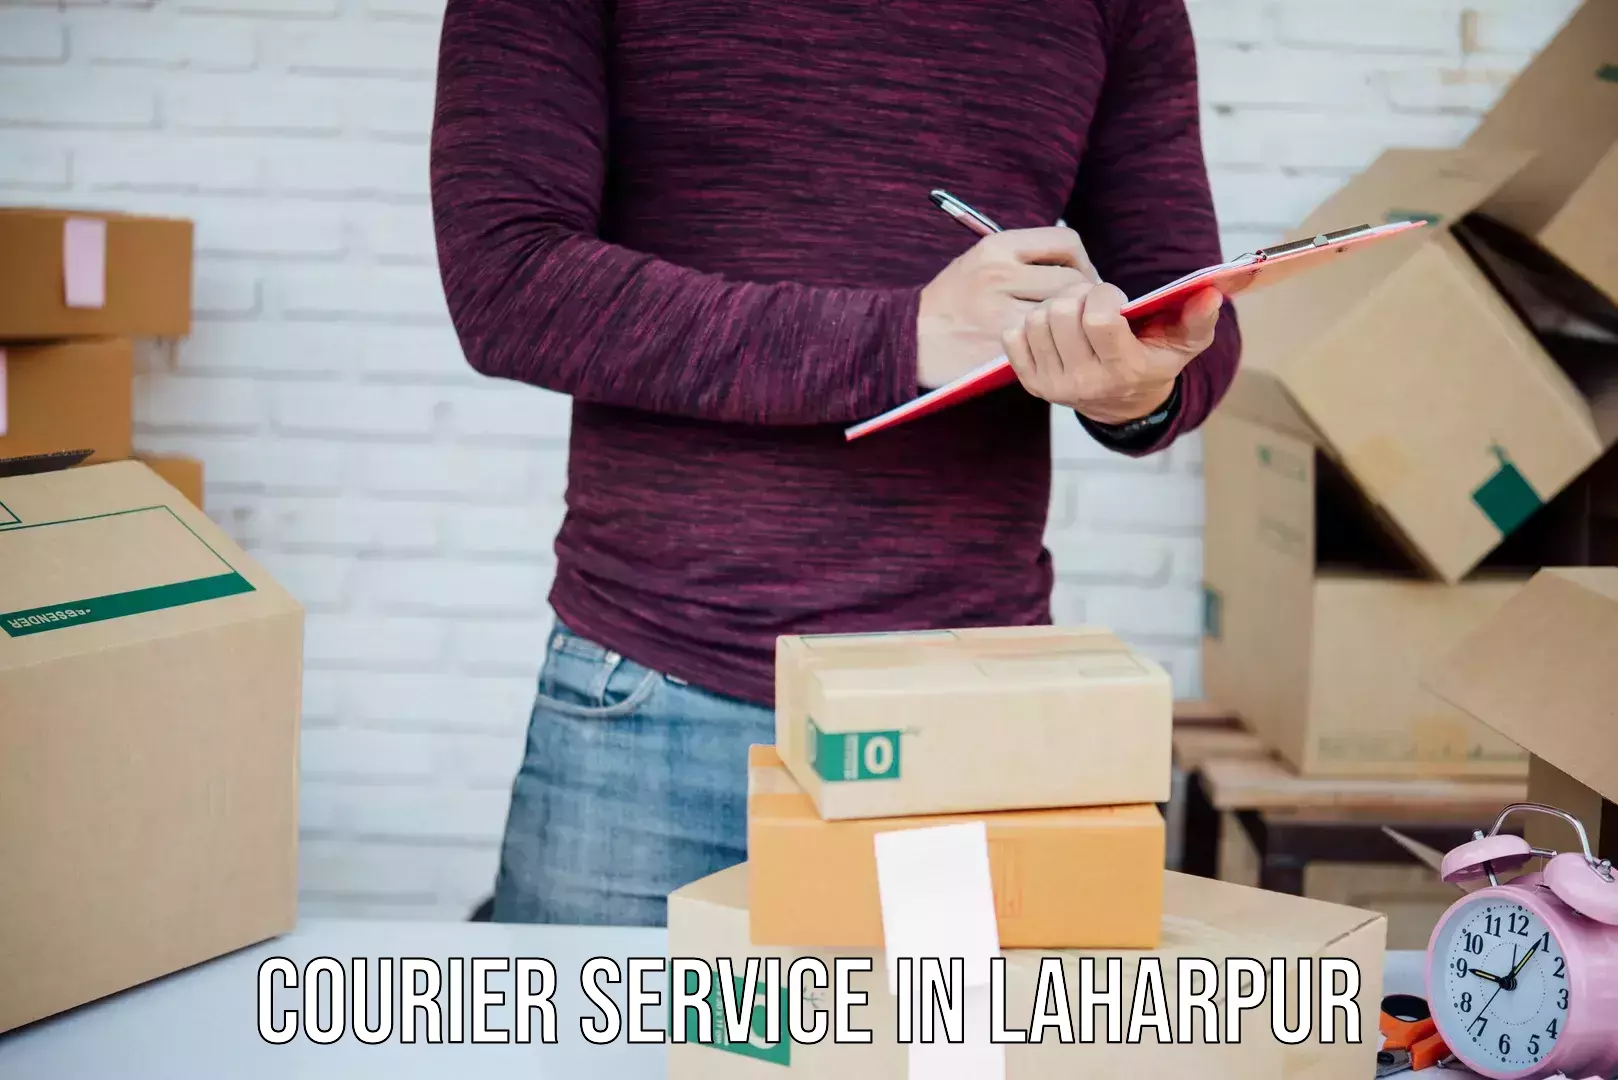 Customer-centric shipping in Laharpur